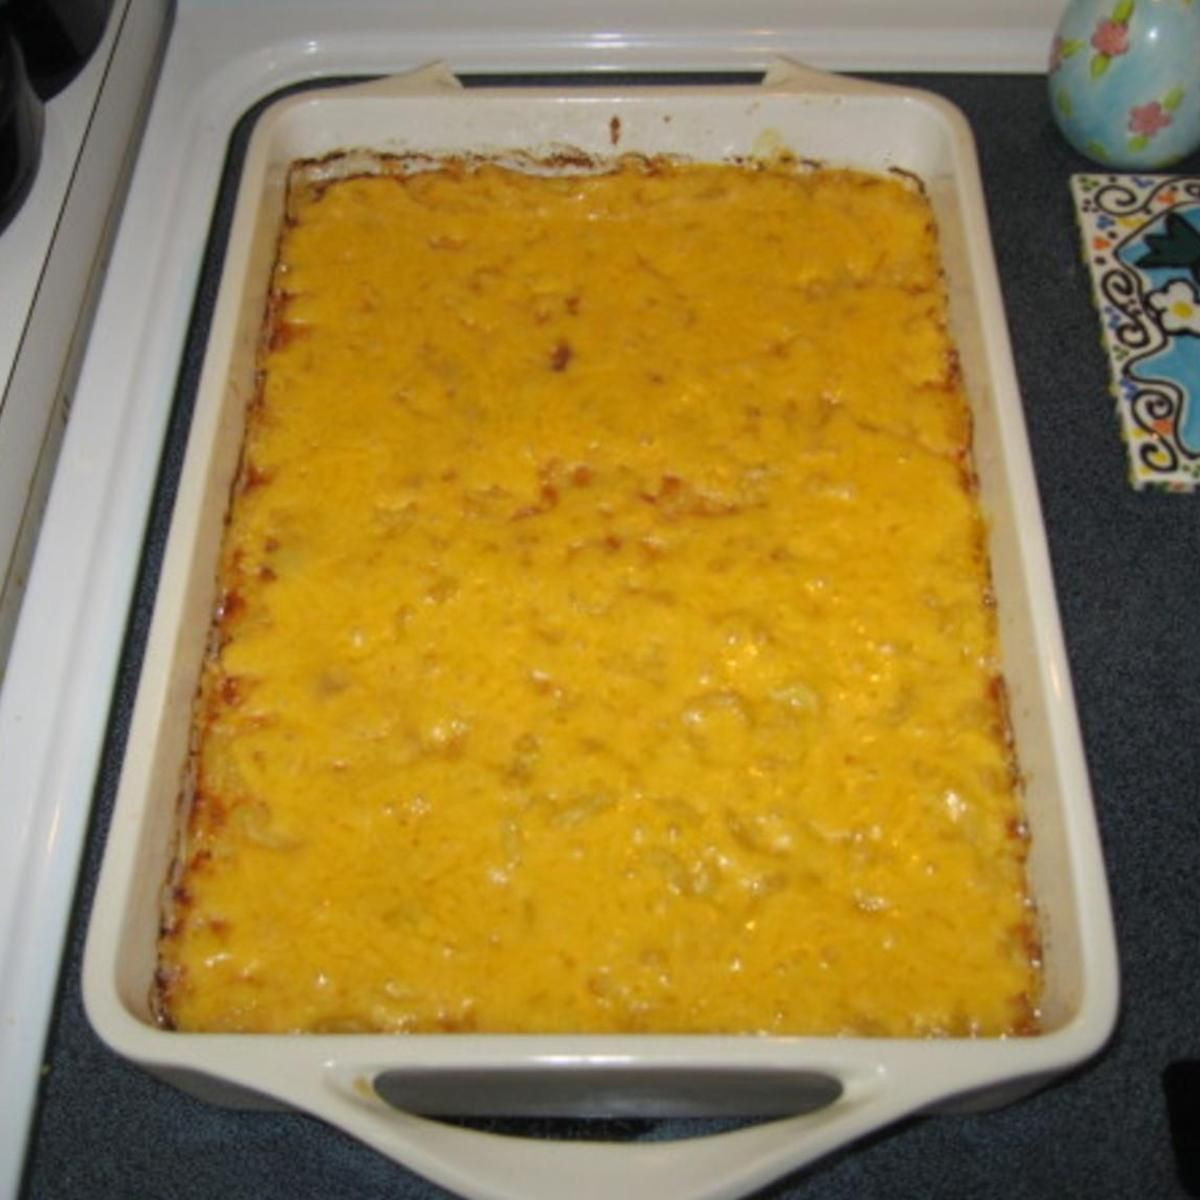 Paula Deen Baked Macaroni And Cheese Recipe Homemade "Macaroni & Cheese" by Paula Deen